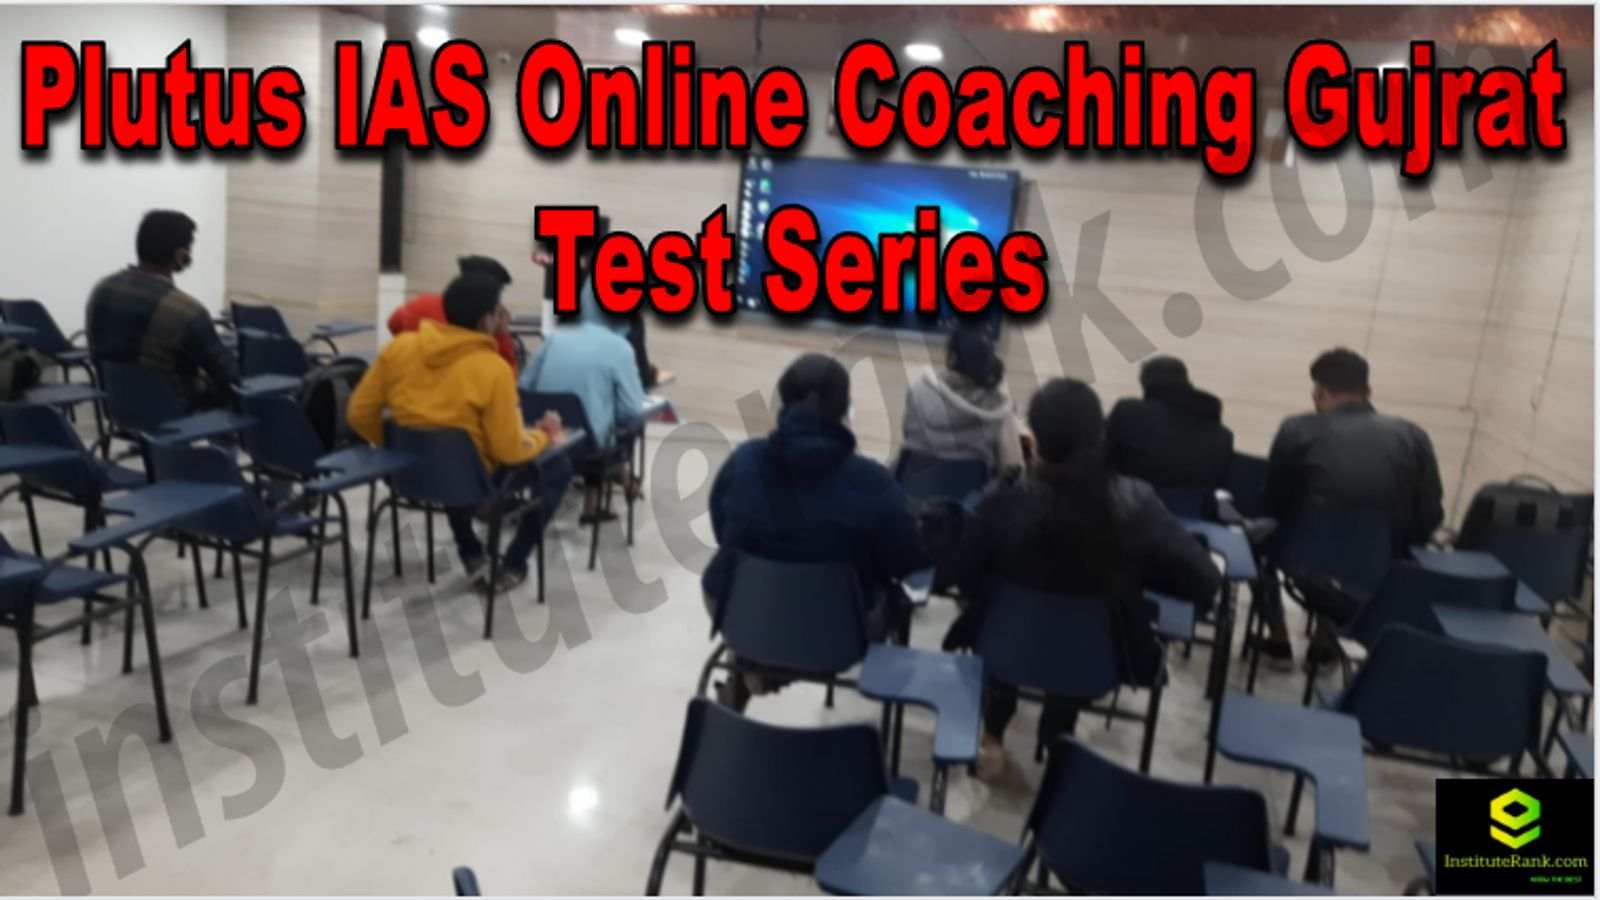 Plutus IAS Online Coaching Gujrat Reviews Test Series